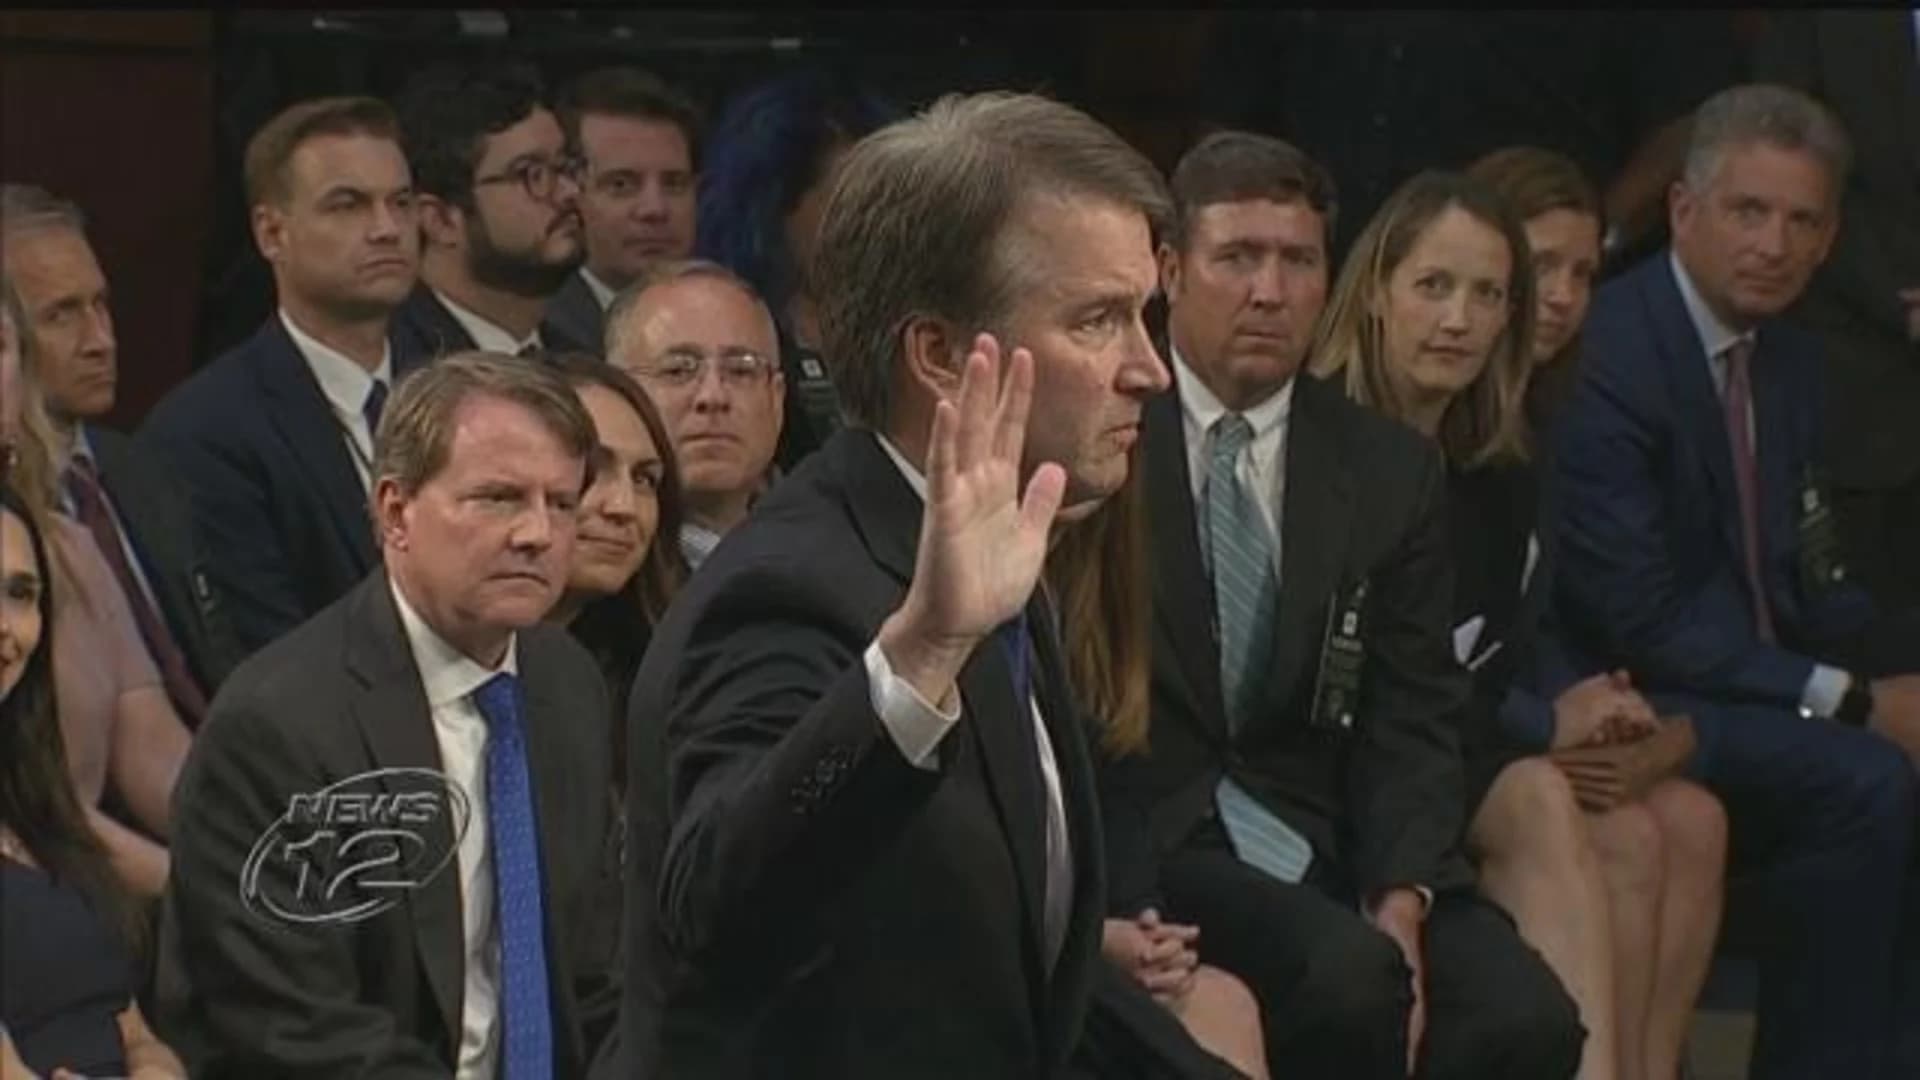 As Senate hearing set for Kavanaugh, new accuser emerges